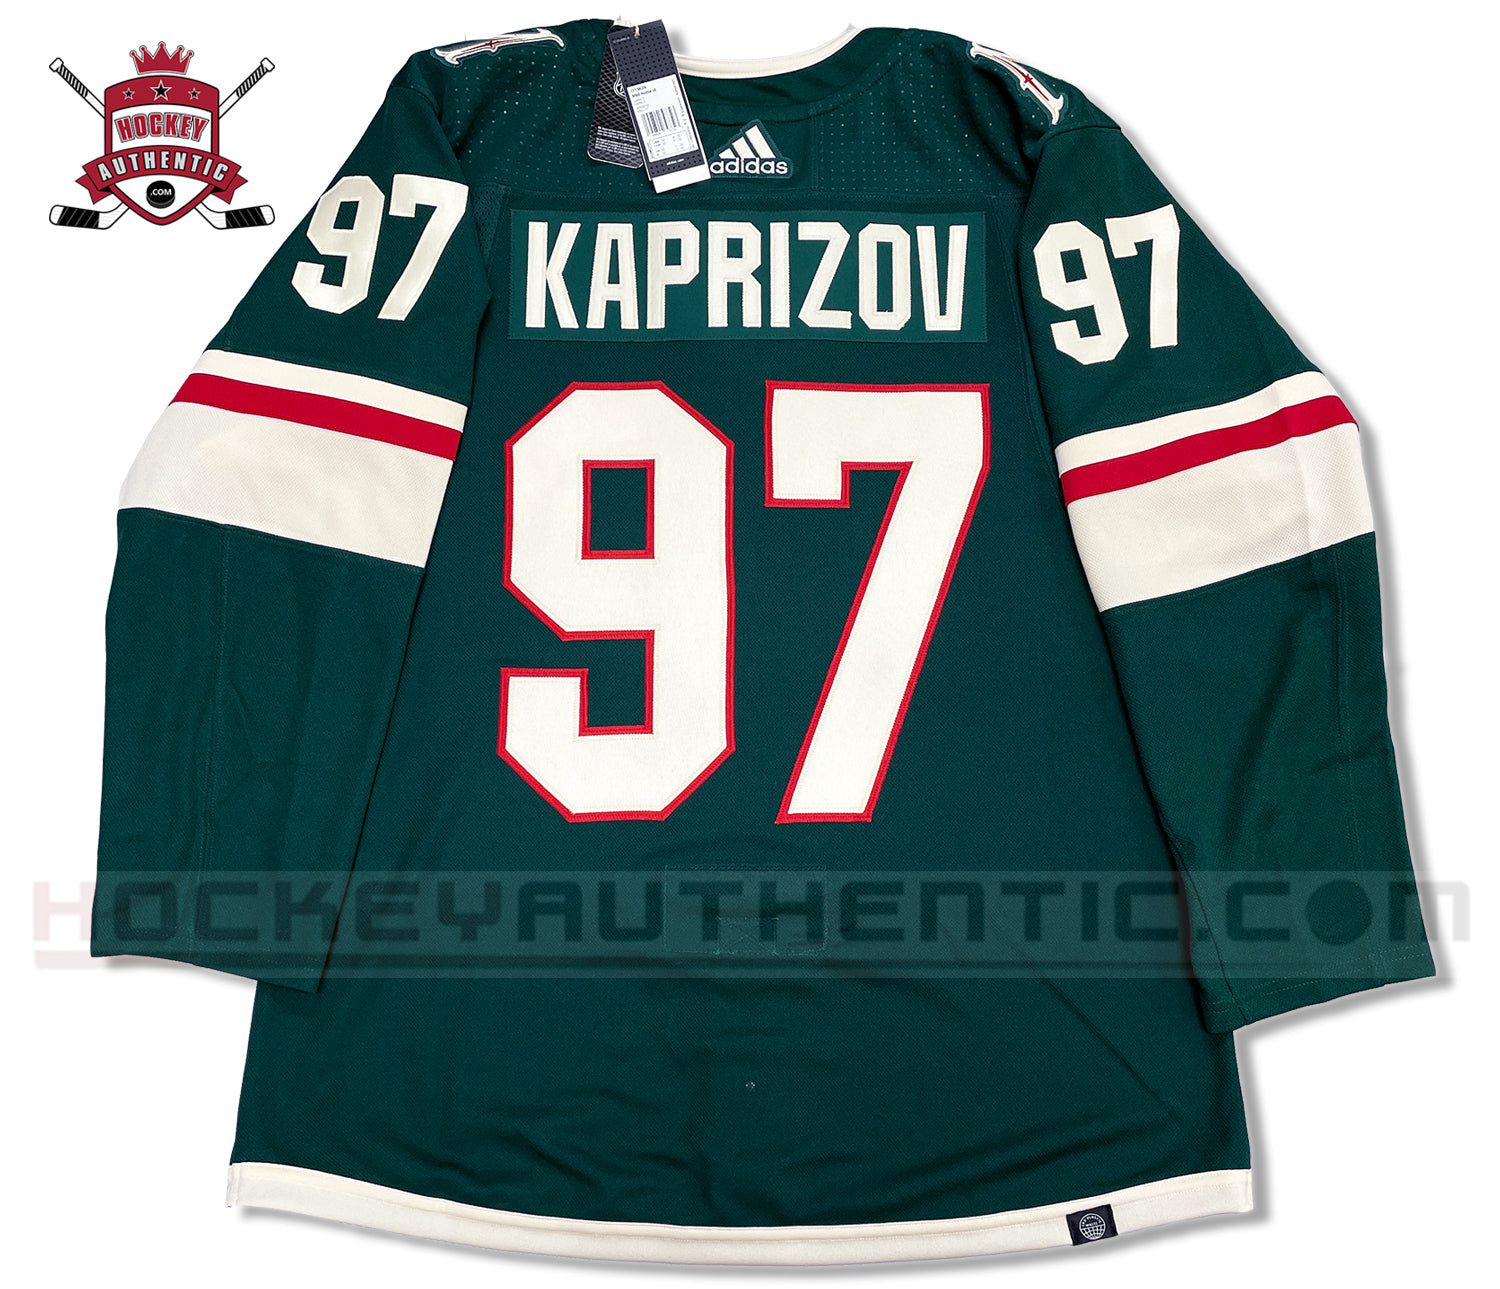 Kirill Kaprizov authentic Wild Jerseys for sale size 50, 54, & 56. $120  shipped : r/hockeyjerseys